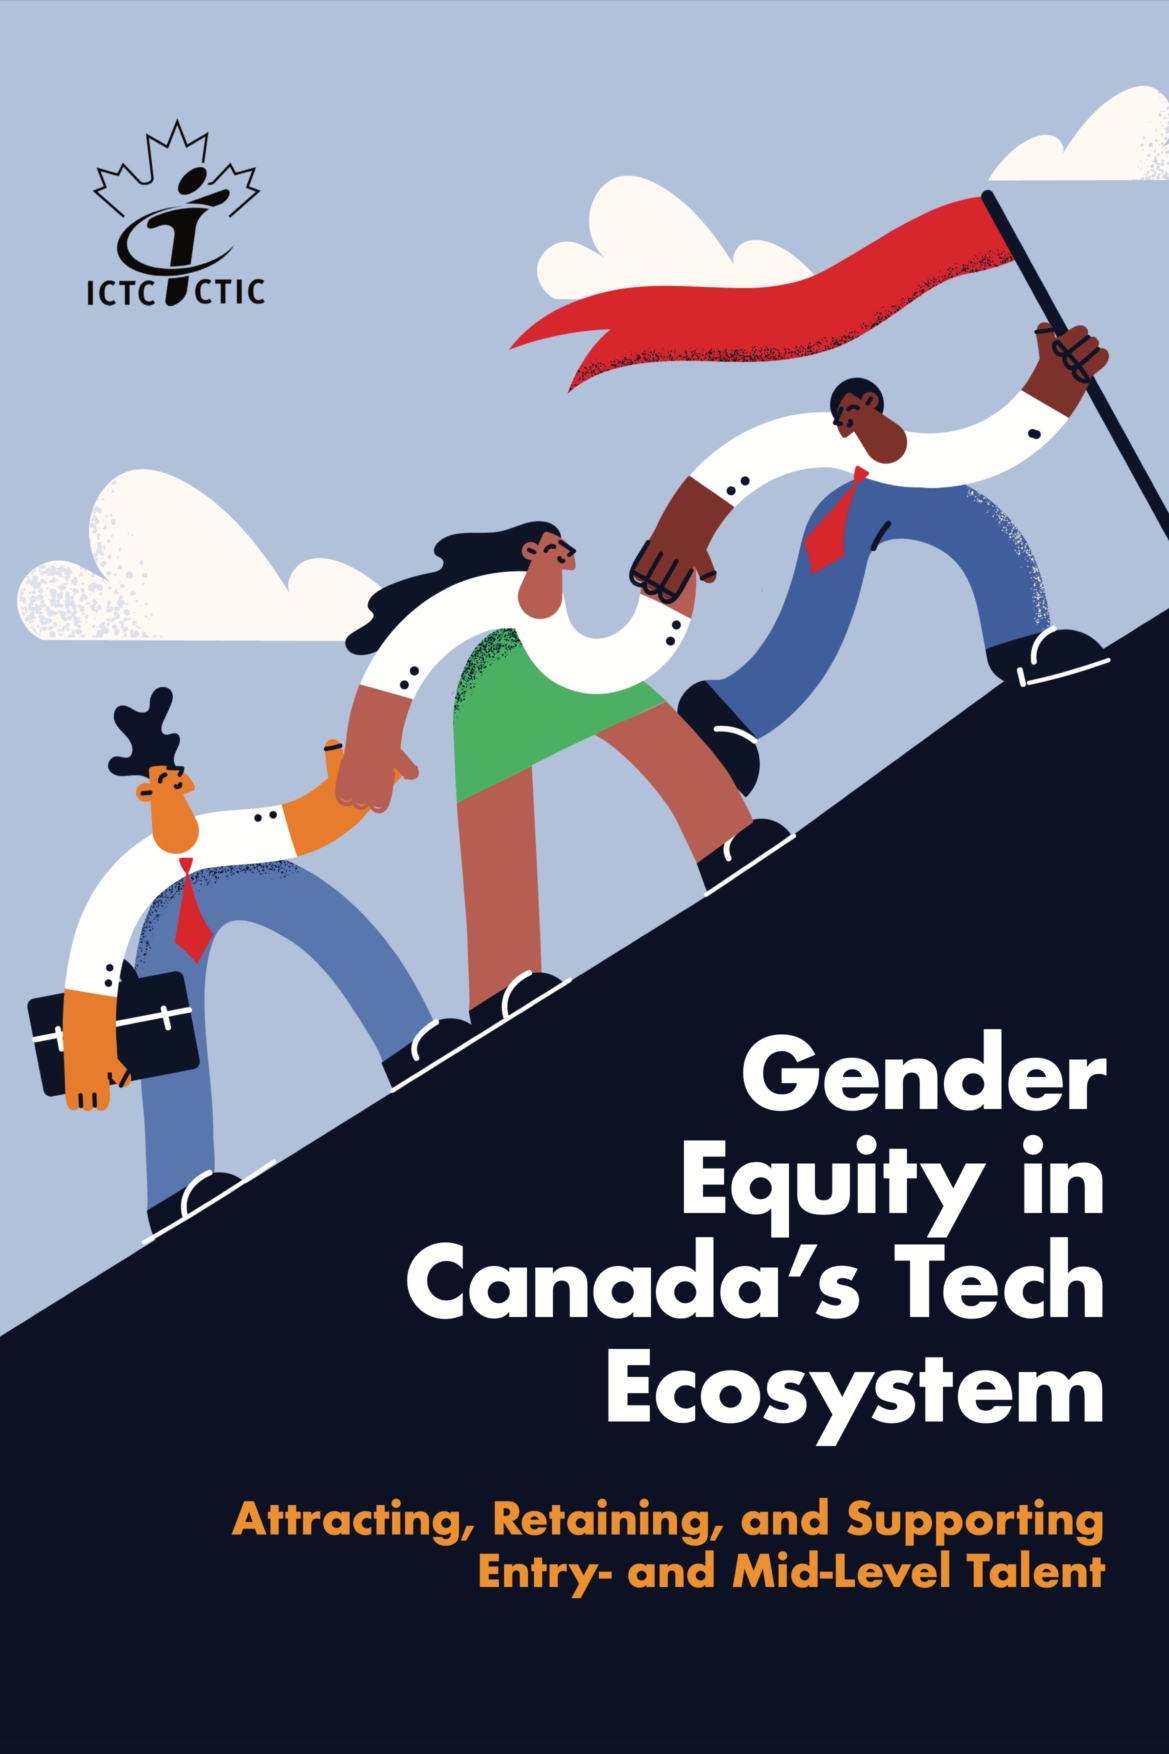 gender equity